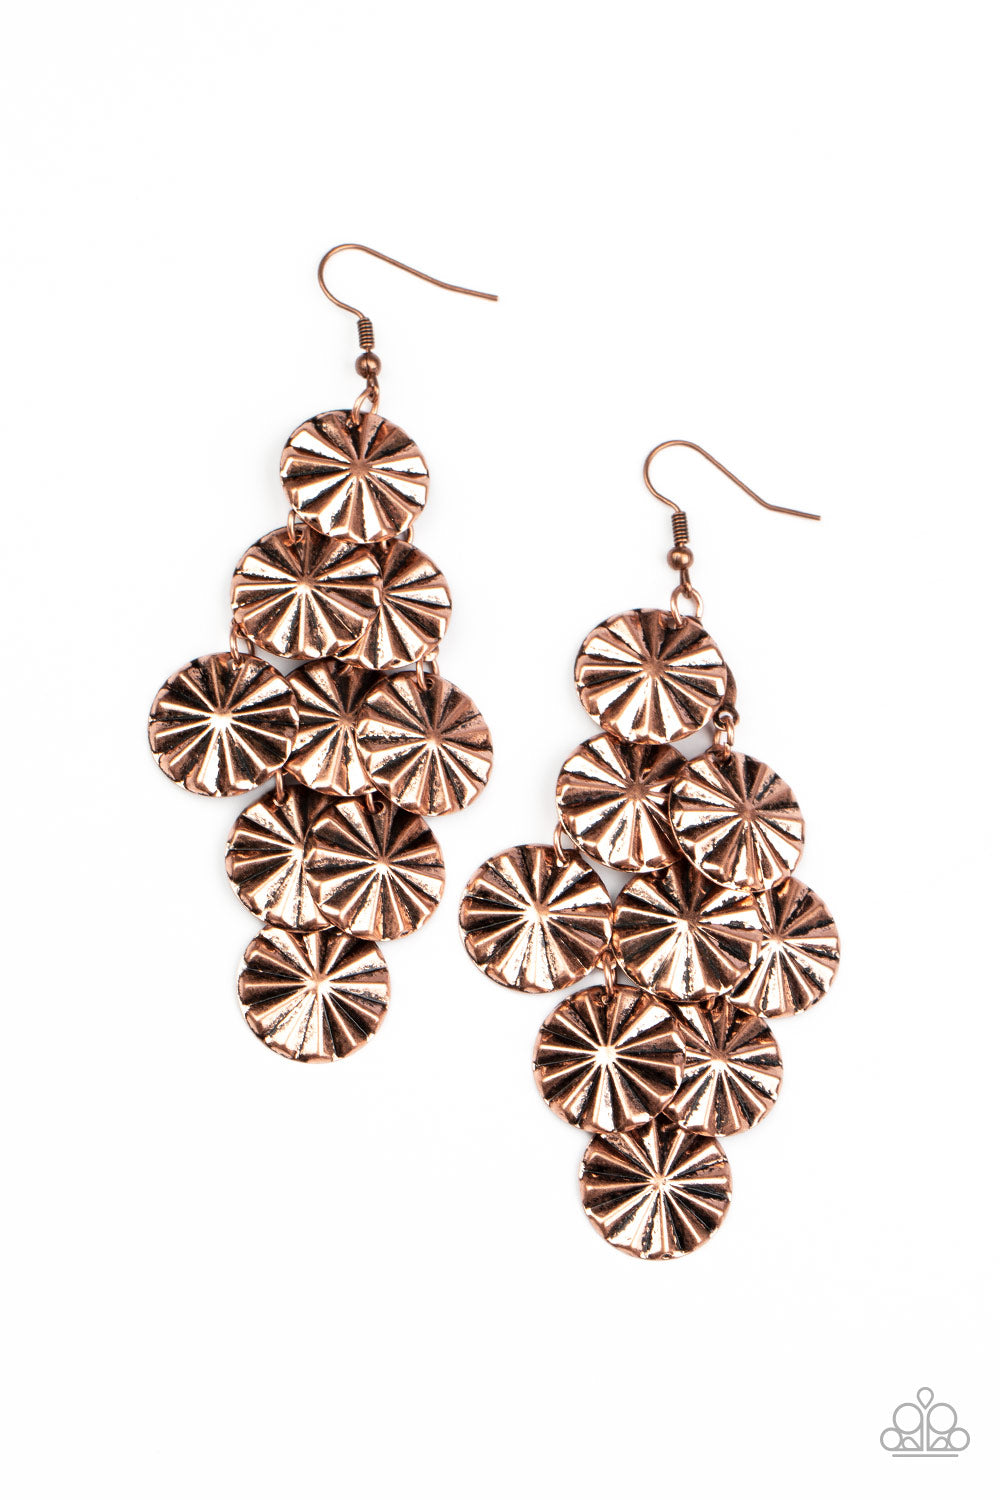 Star Spangled Shine - Copper Earrings - Princess Glam Shop